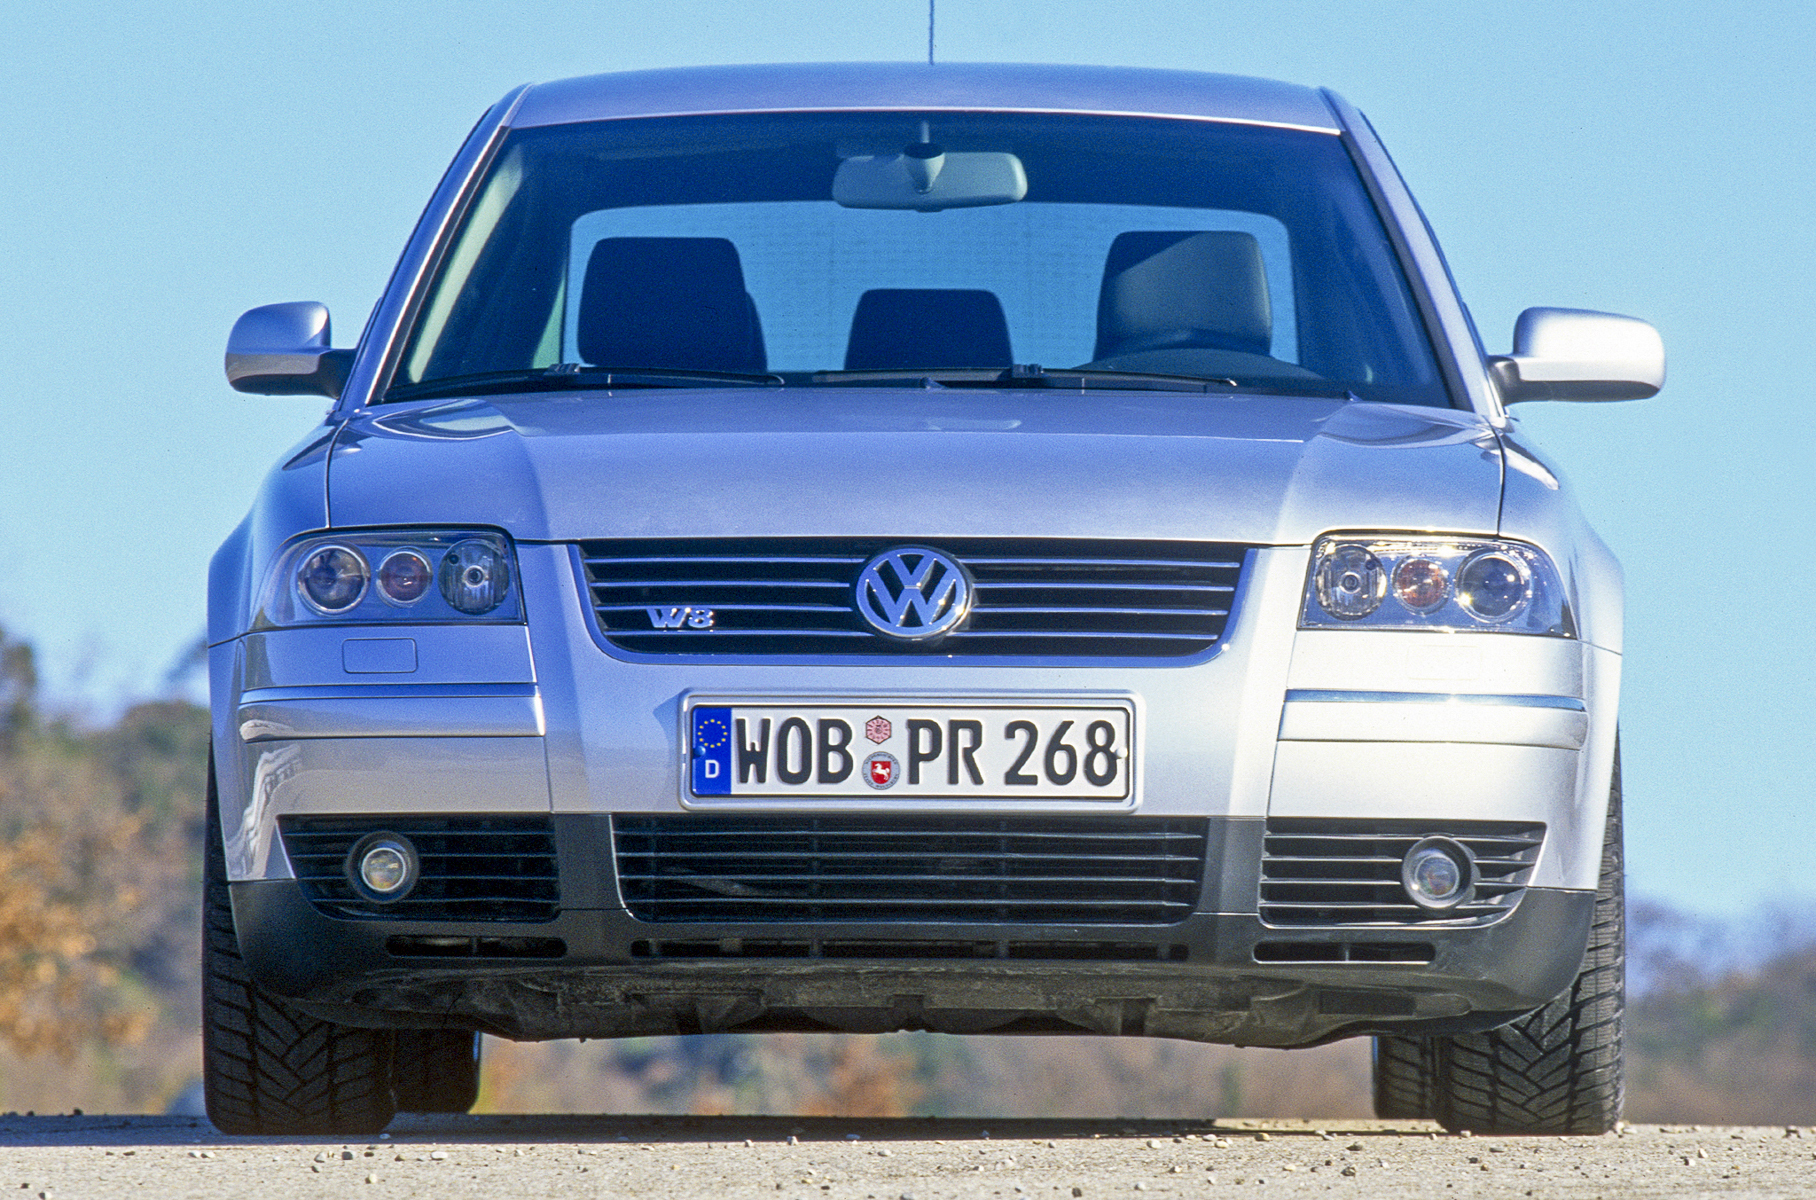 VW Passat w8